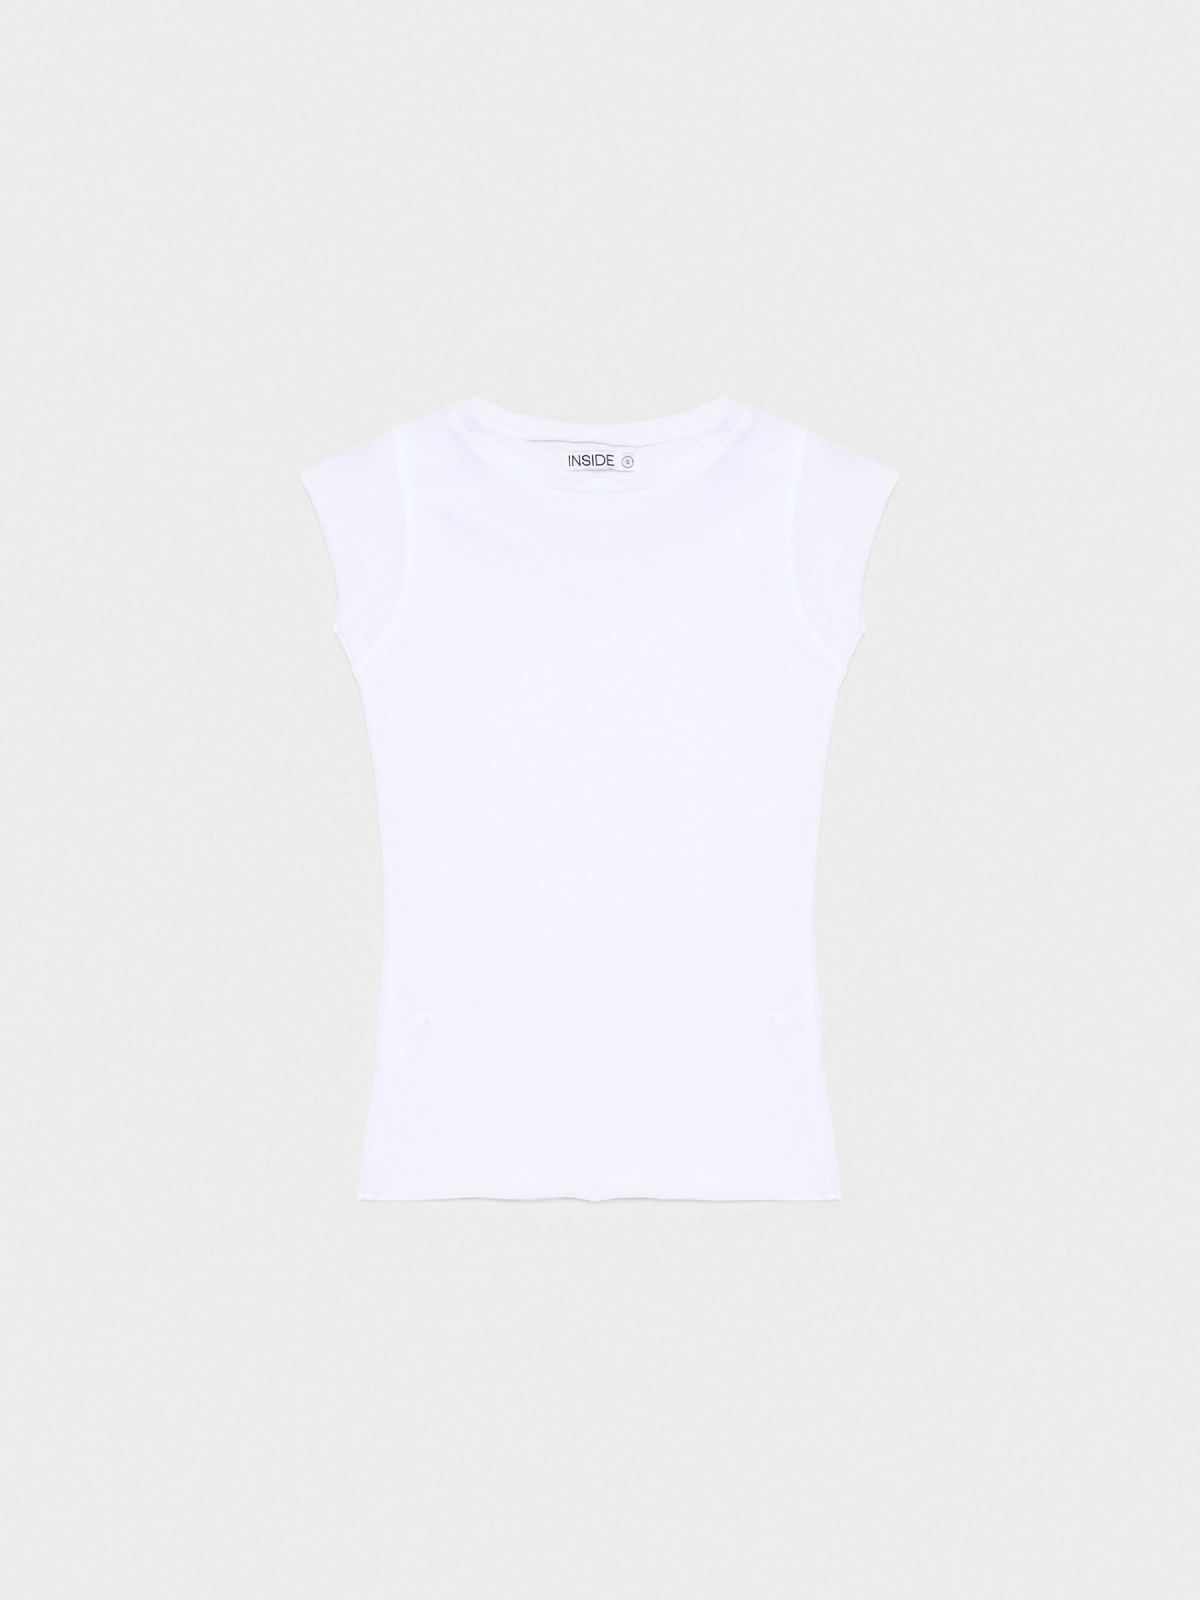  T-shirt básica de manga curta branco